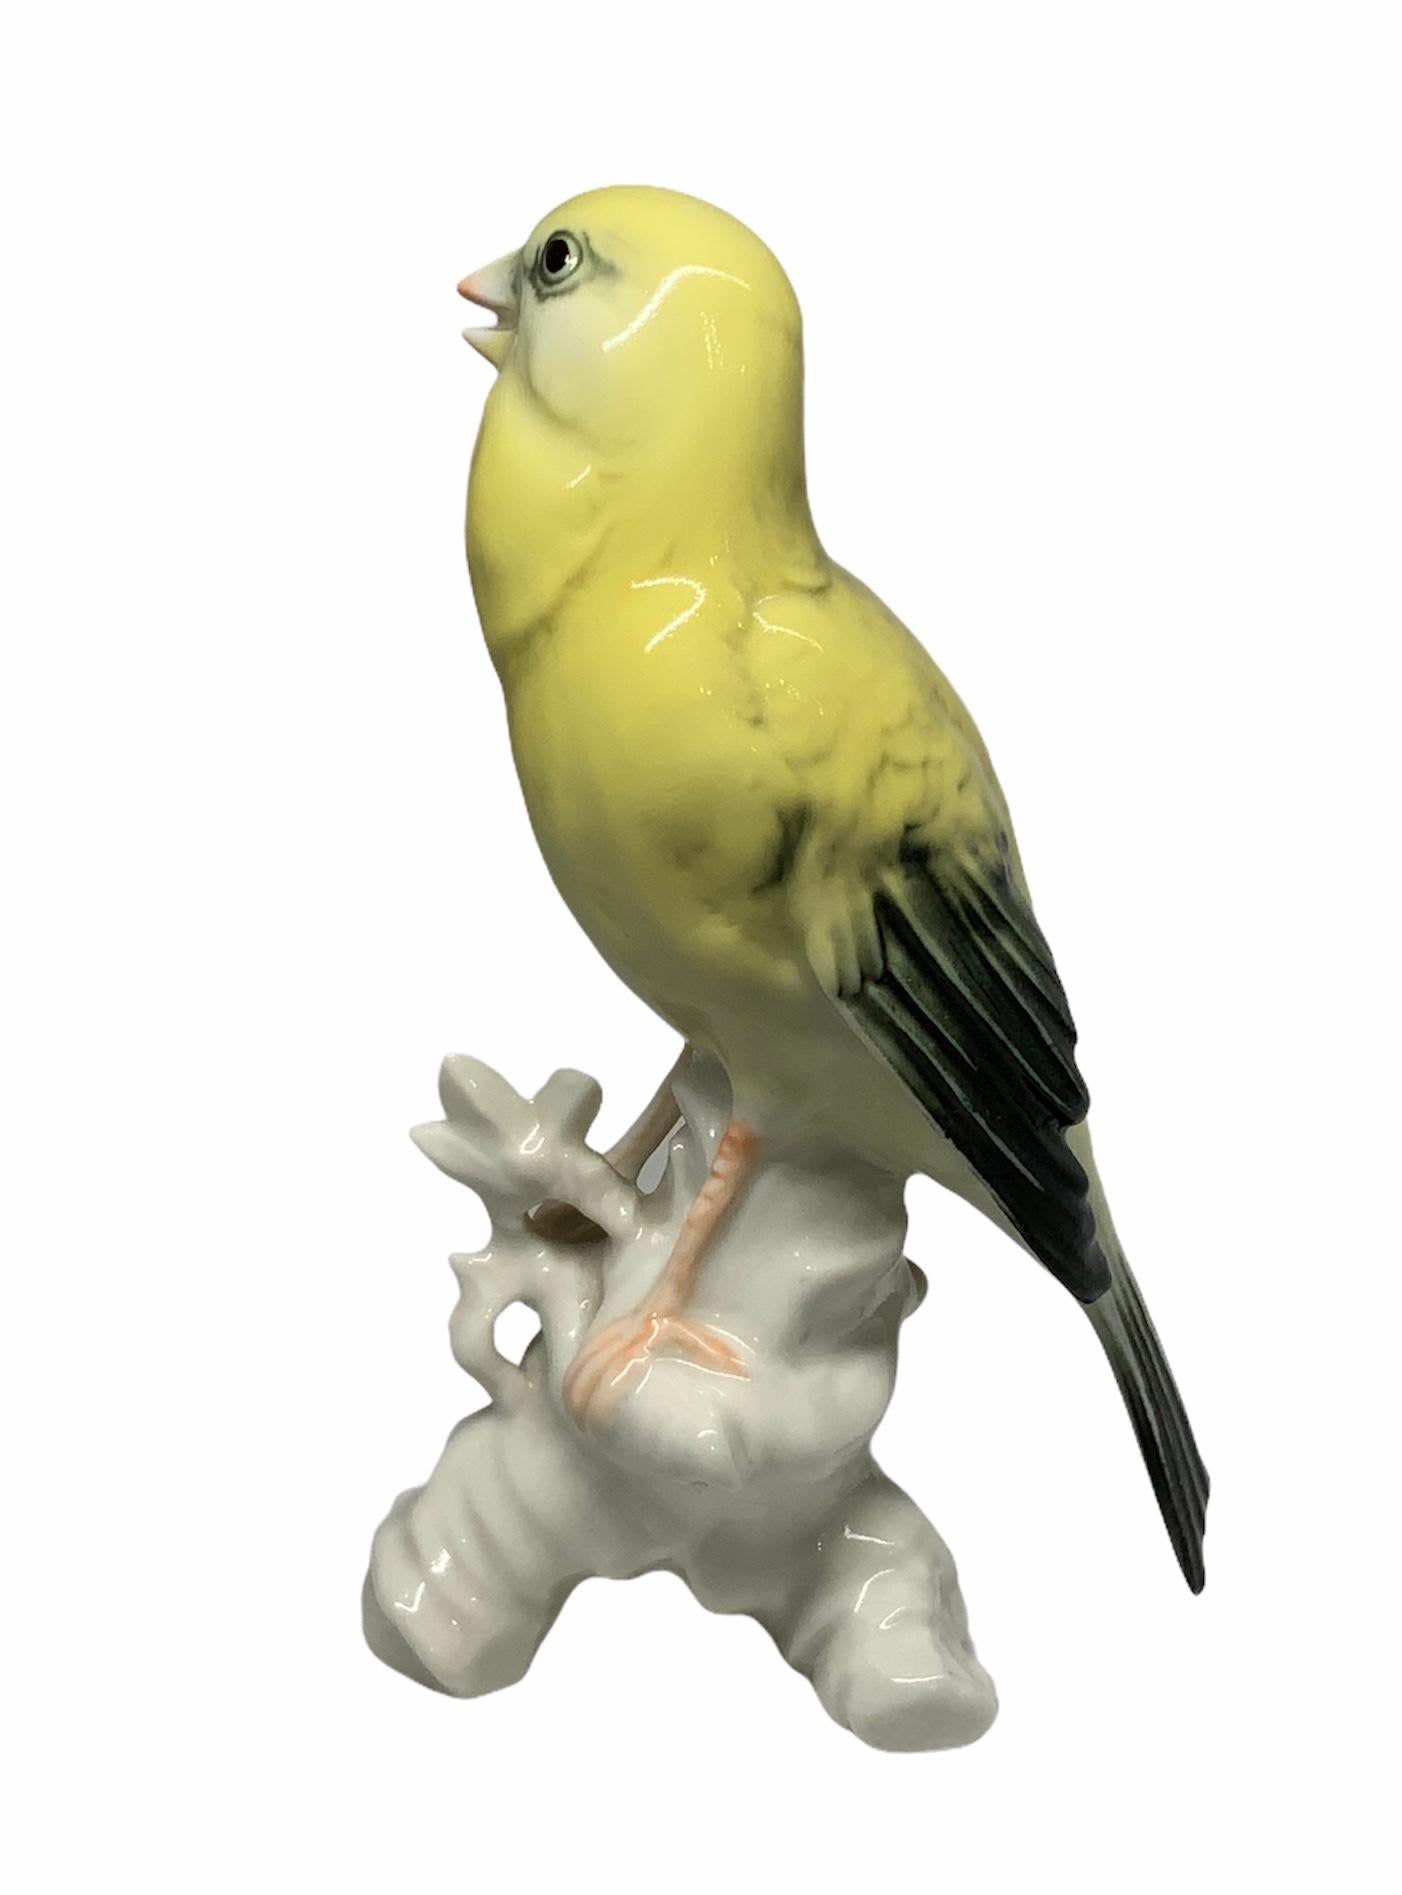 anthropomorphic canary.